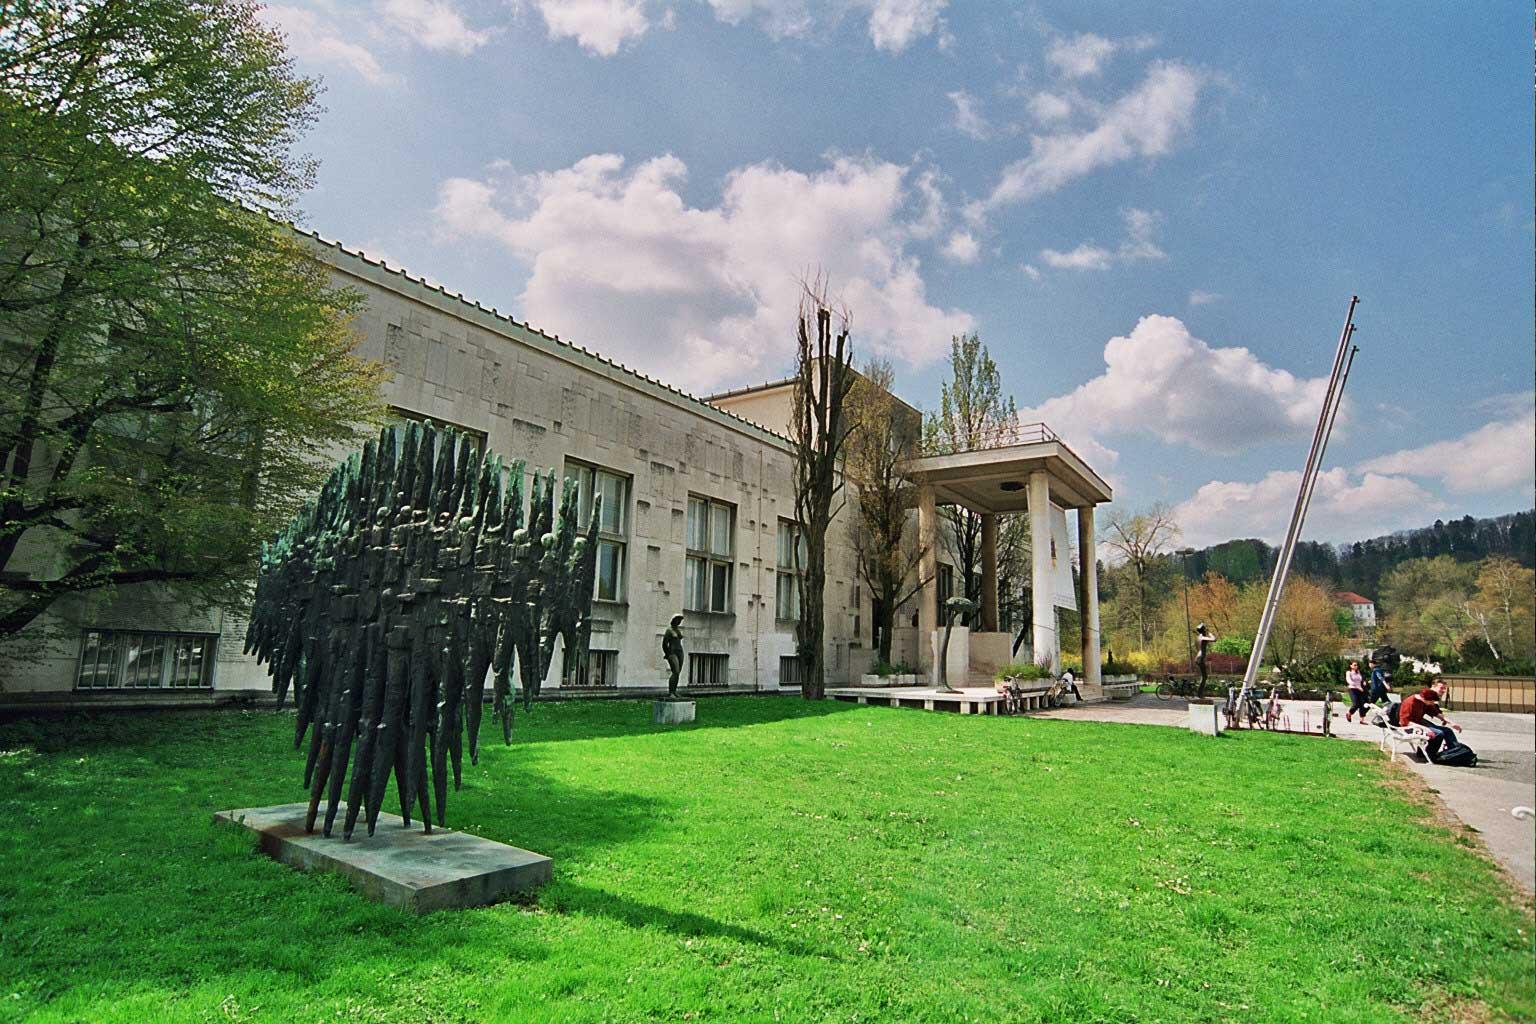 The Museum of Modern Art